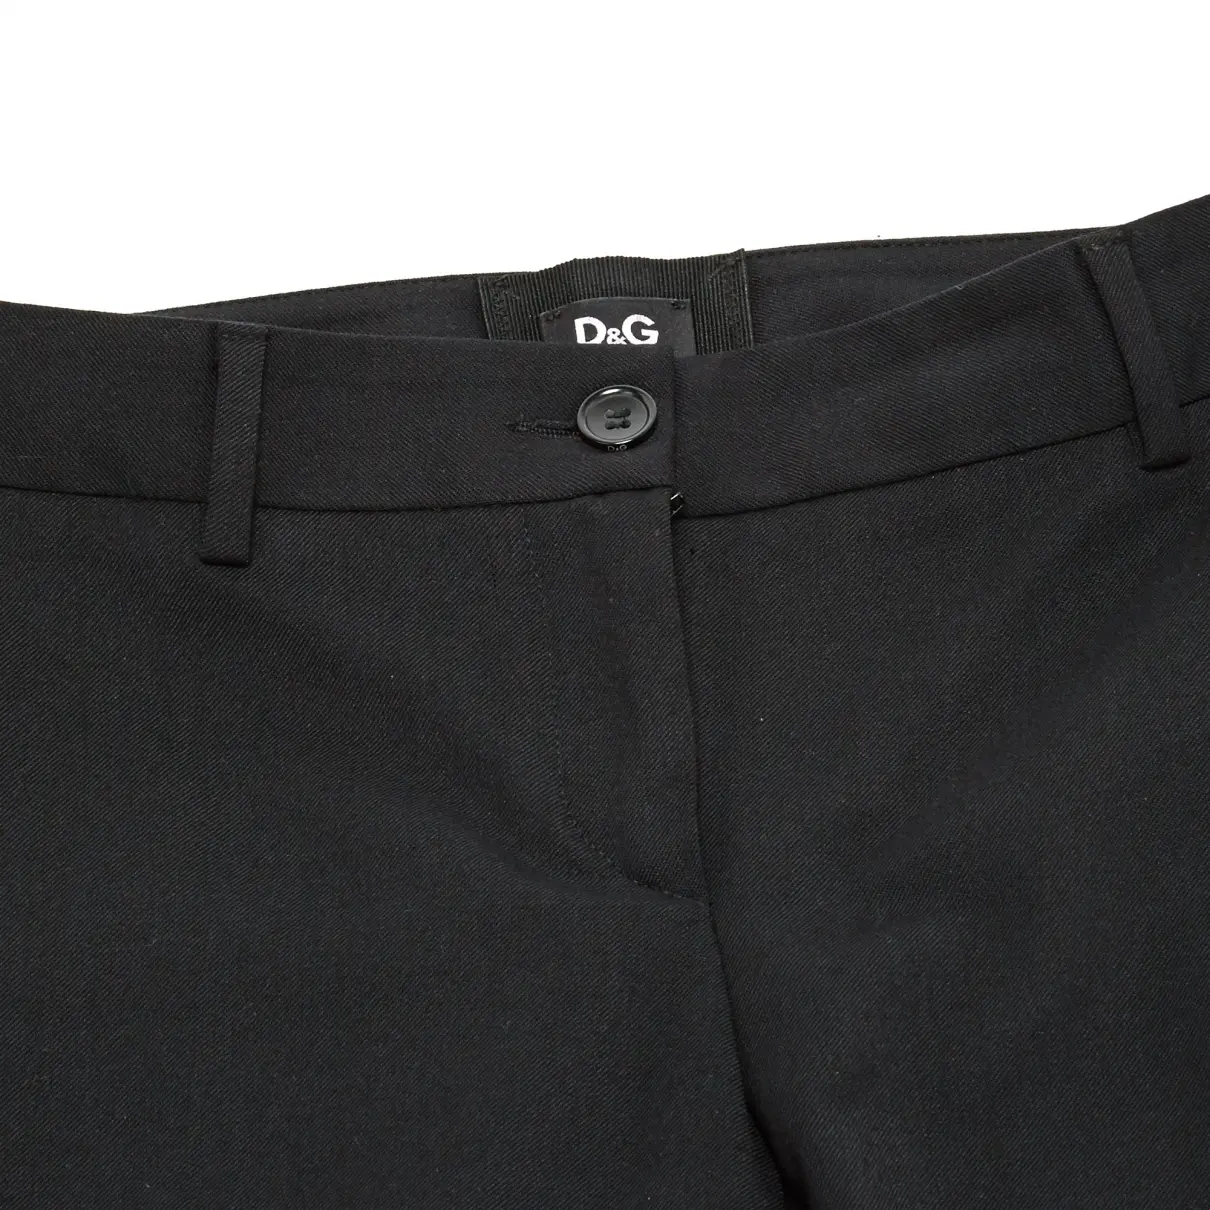 Buy D&G Straight pants online